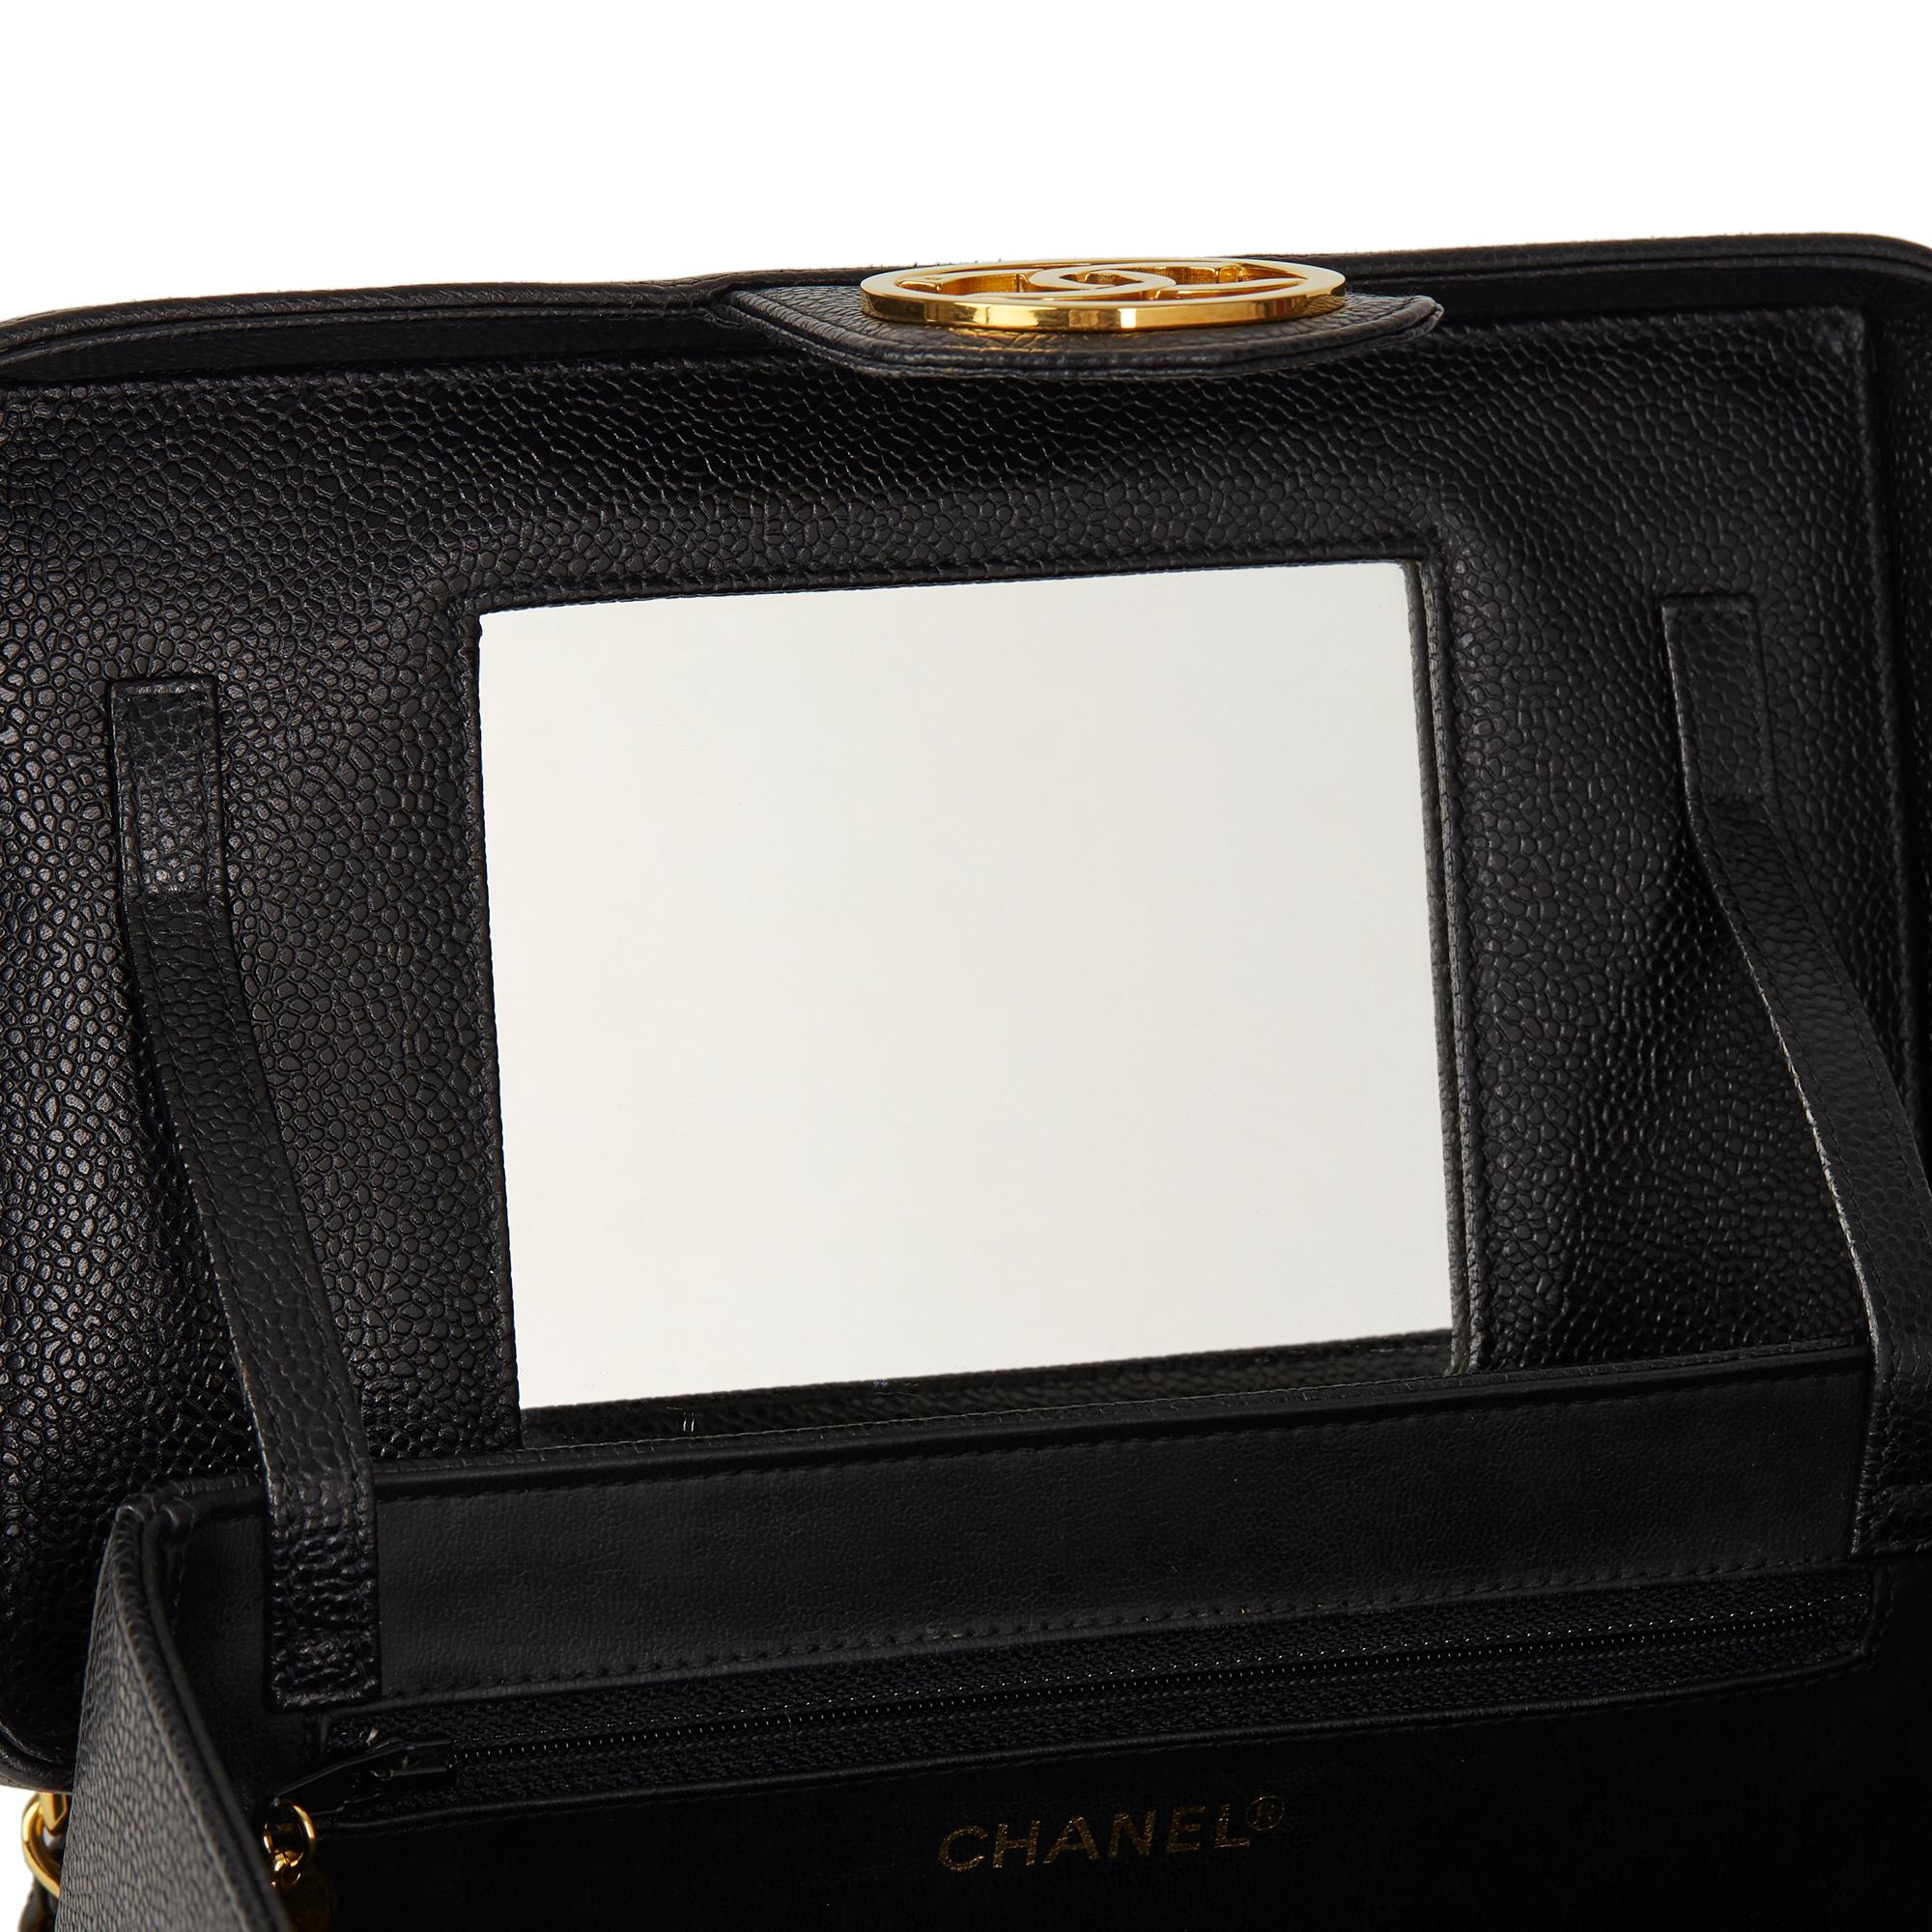 1996 Chanel Black Caviar Leather Vintage Classic Vanity Case 5